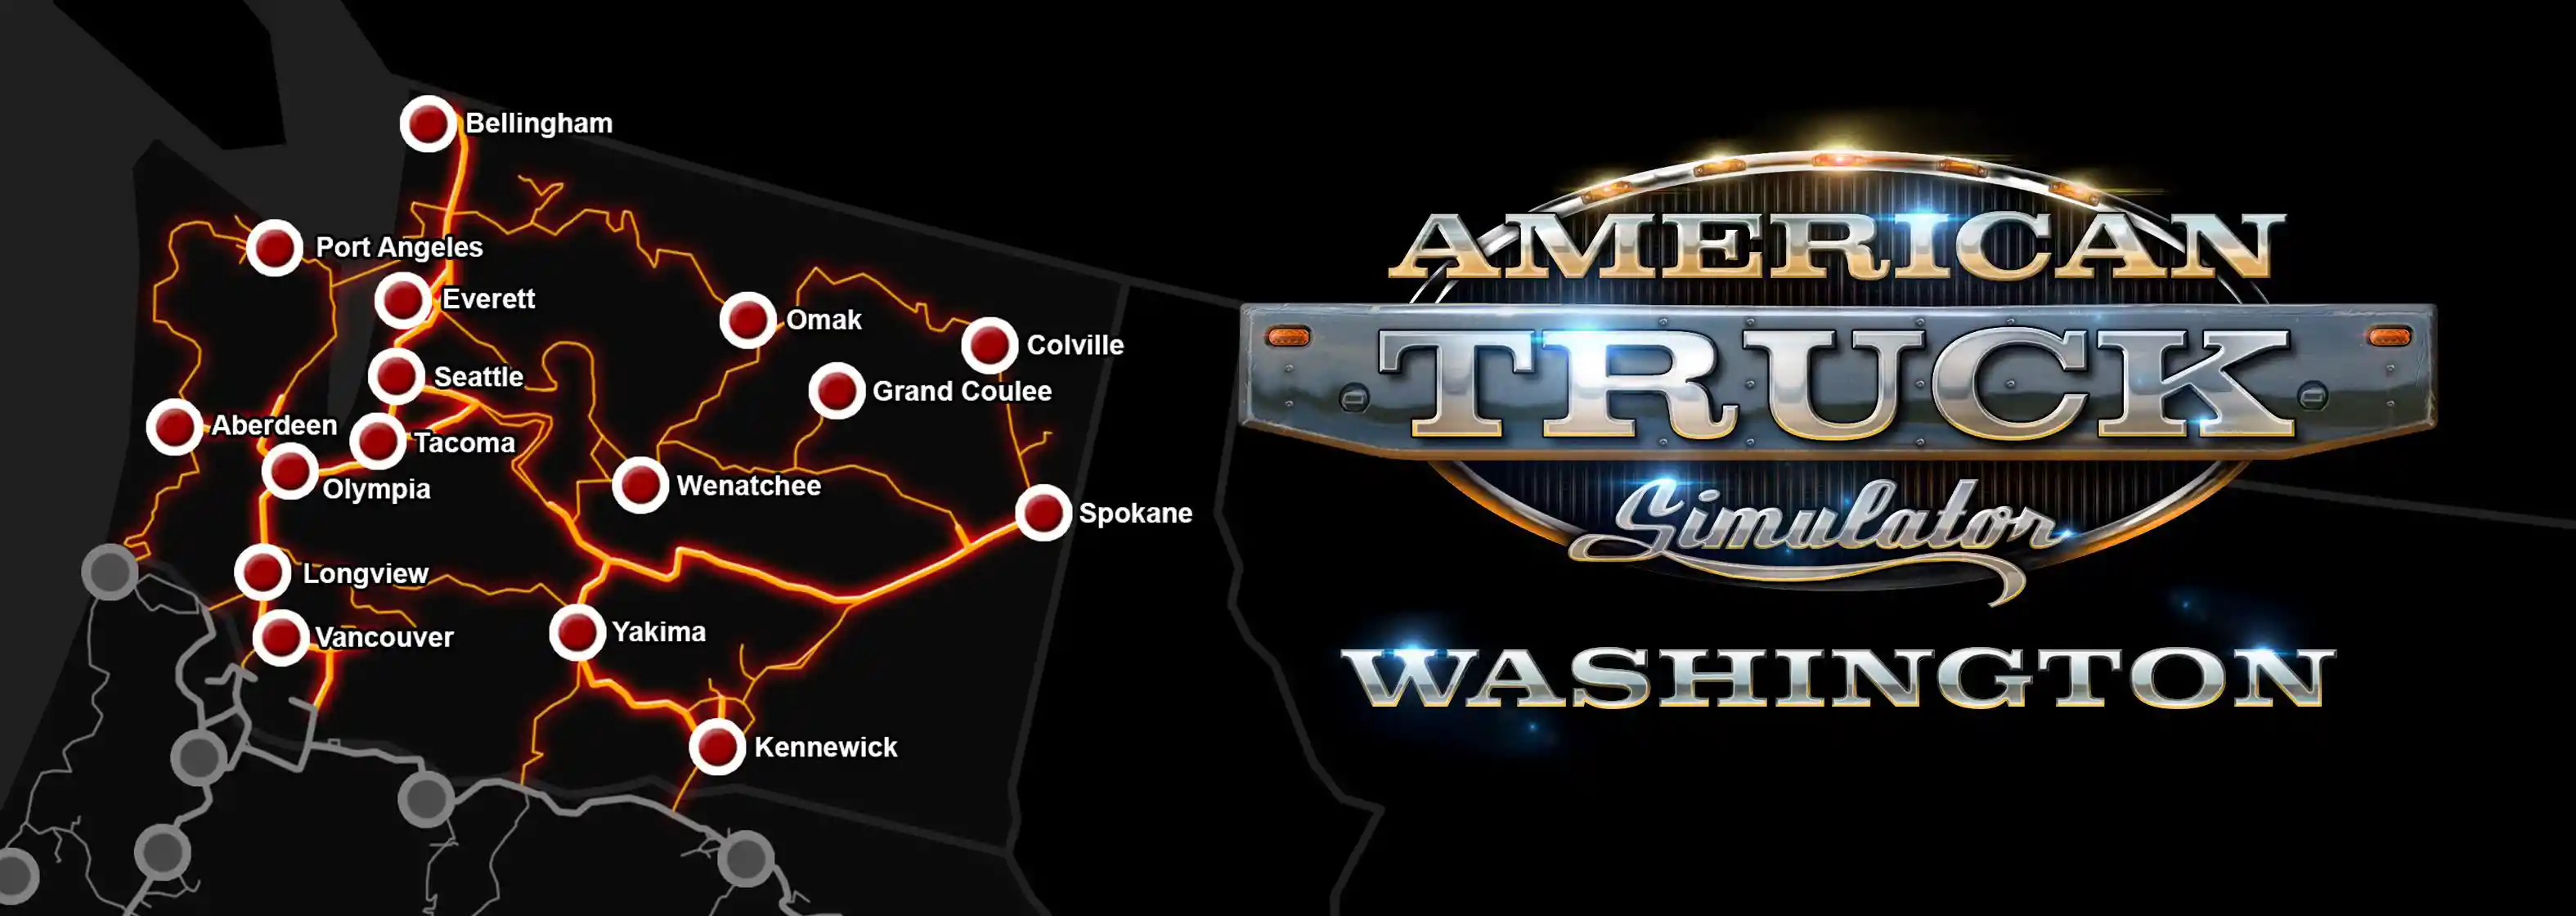 Washington-Map